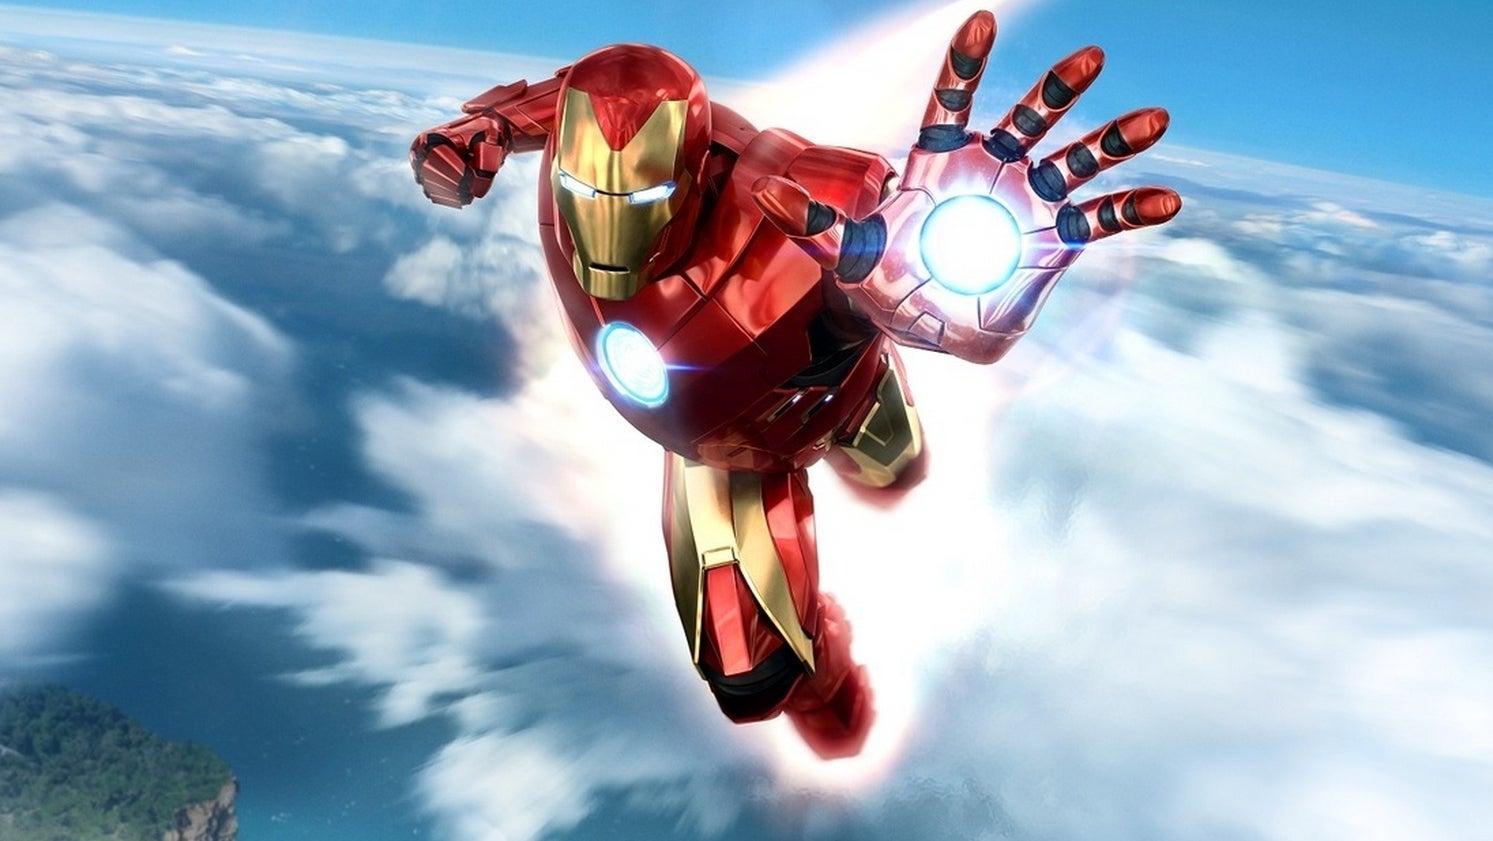 Imagem para Marvel's Iron Man dura entre 8 a 10 horas, segundo testes internos